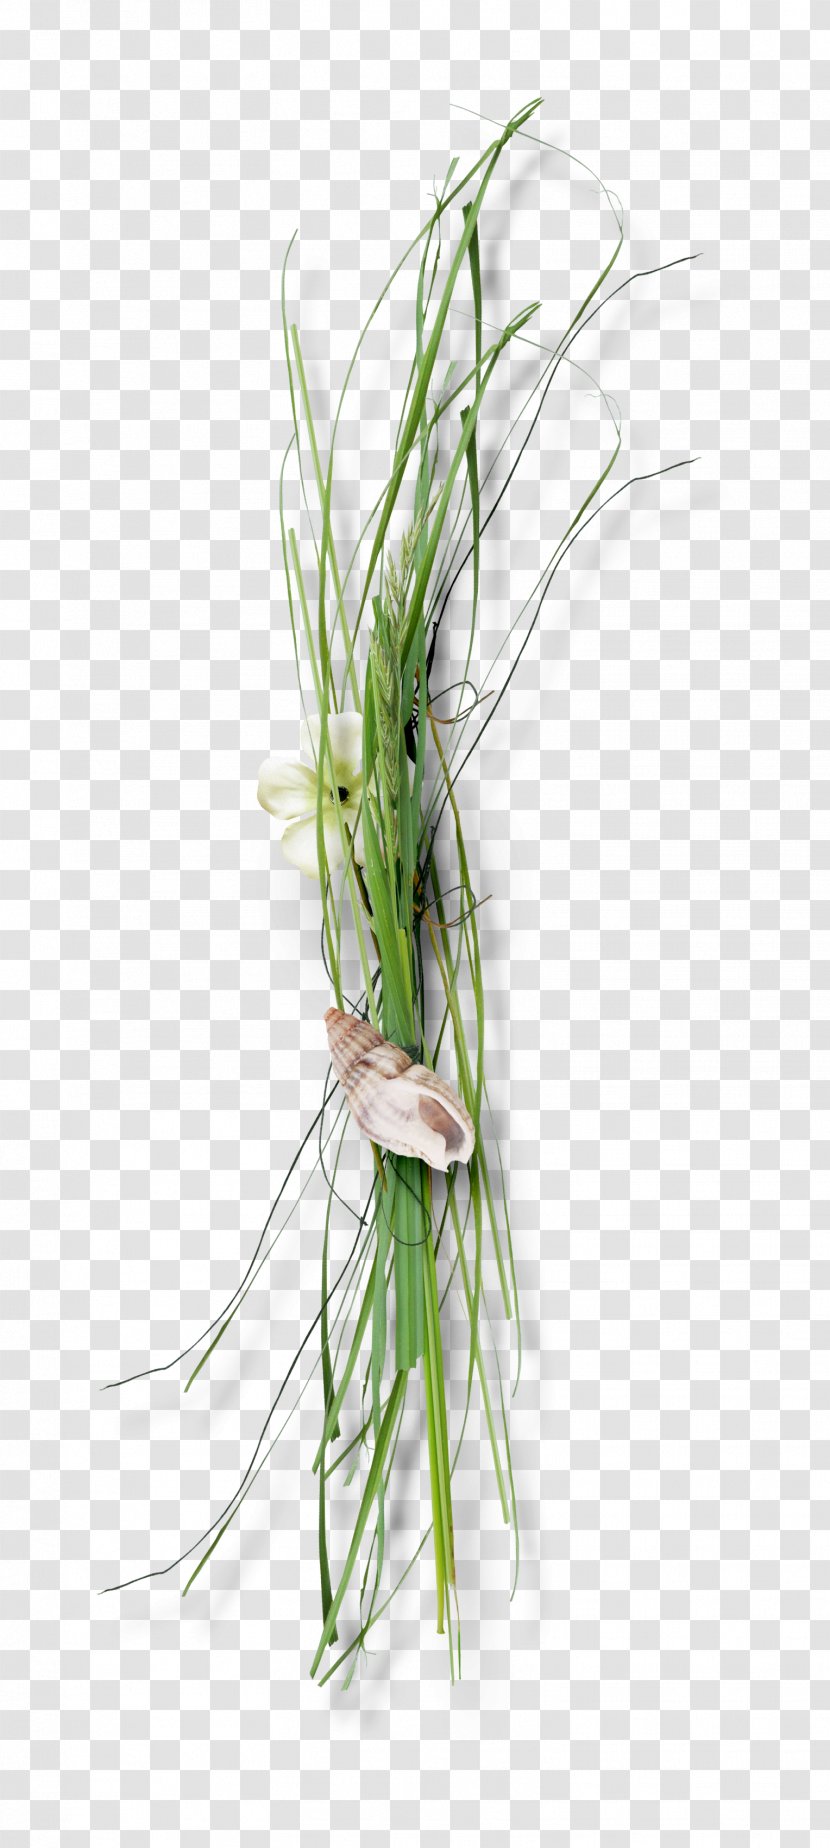 Download Floral Design - Plant Stem - Grass Flowers Conch Transparent PNG